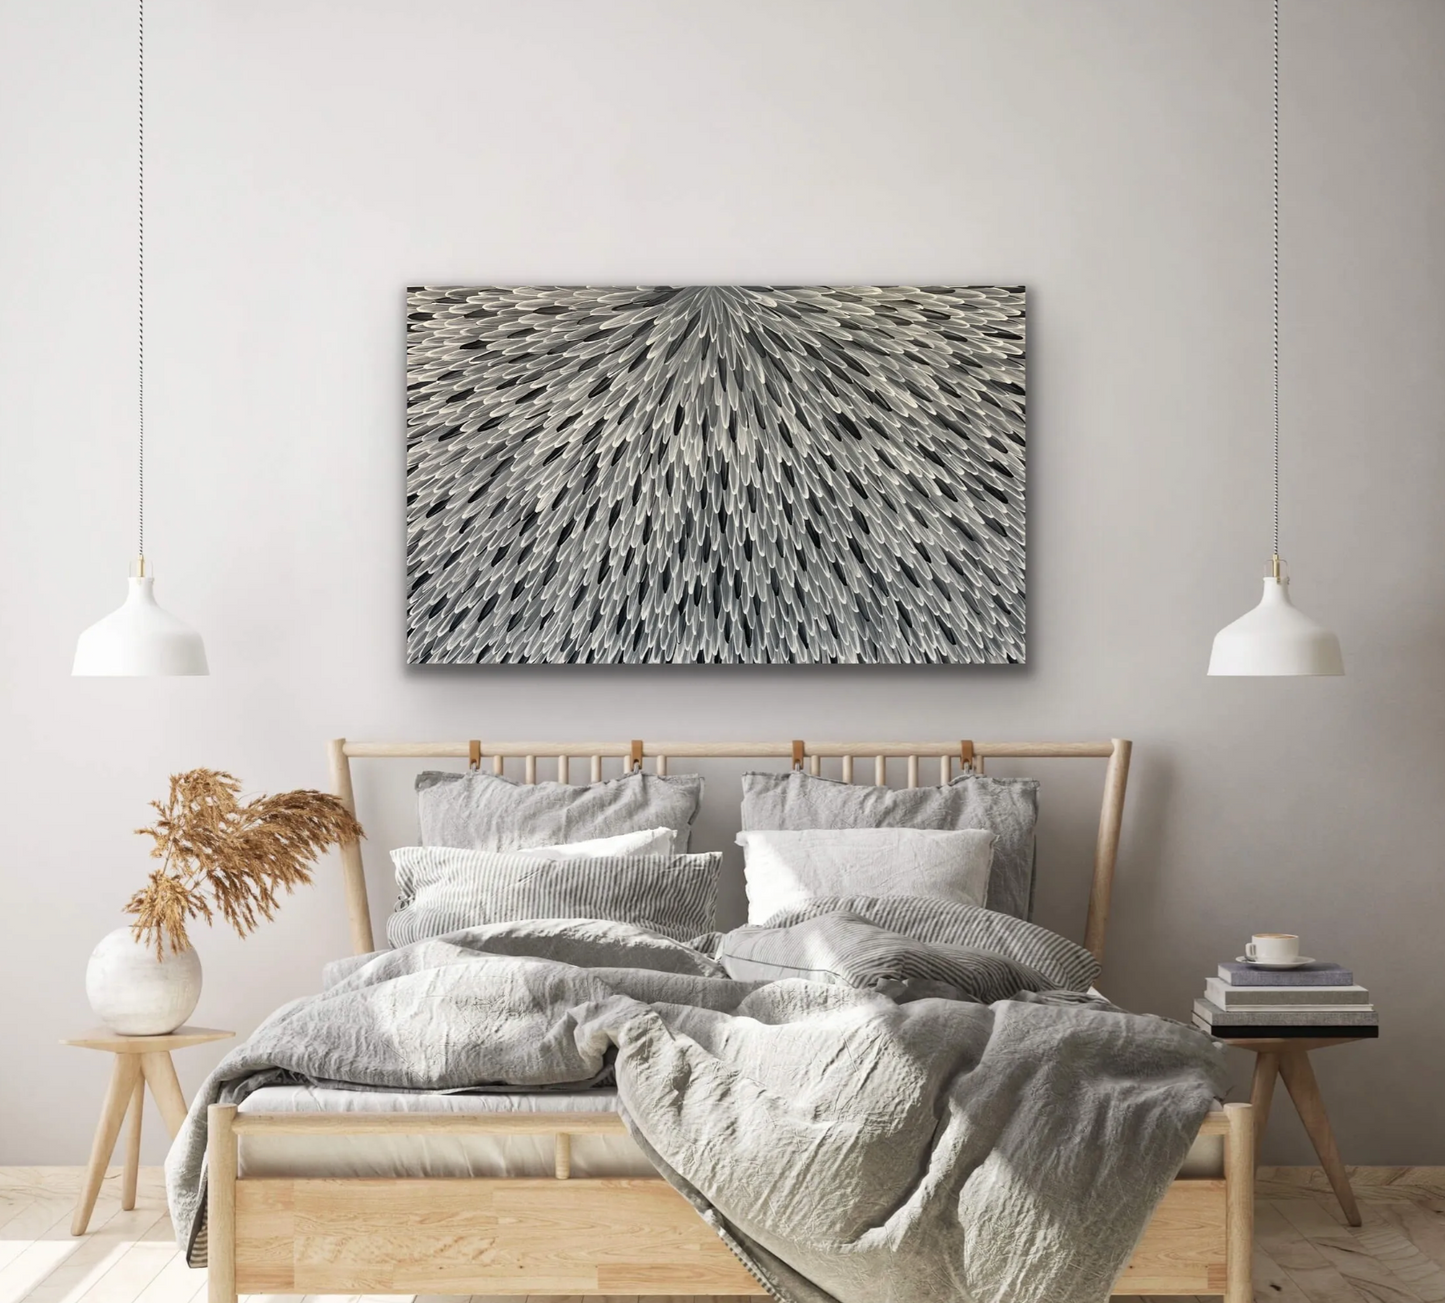 RAYMOND WALTERS PENANGKE - Emu Feathers 90x150cm (black/white)